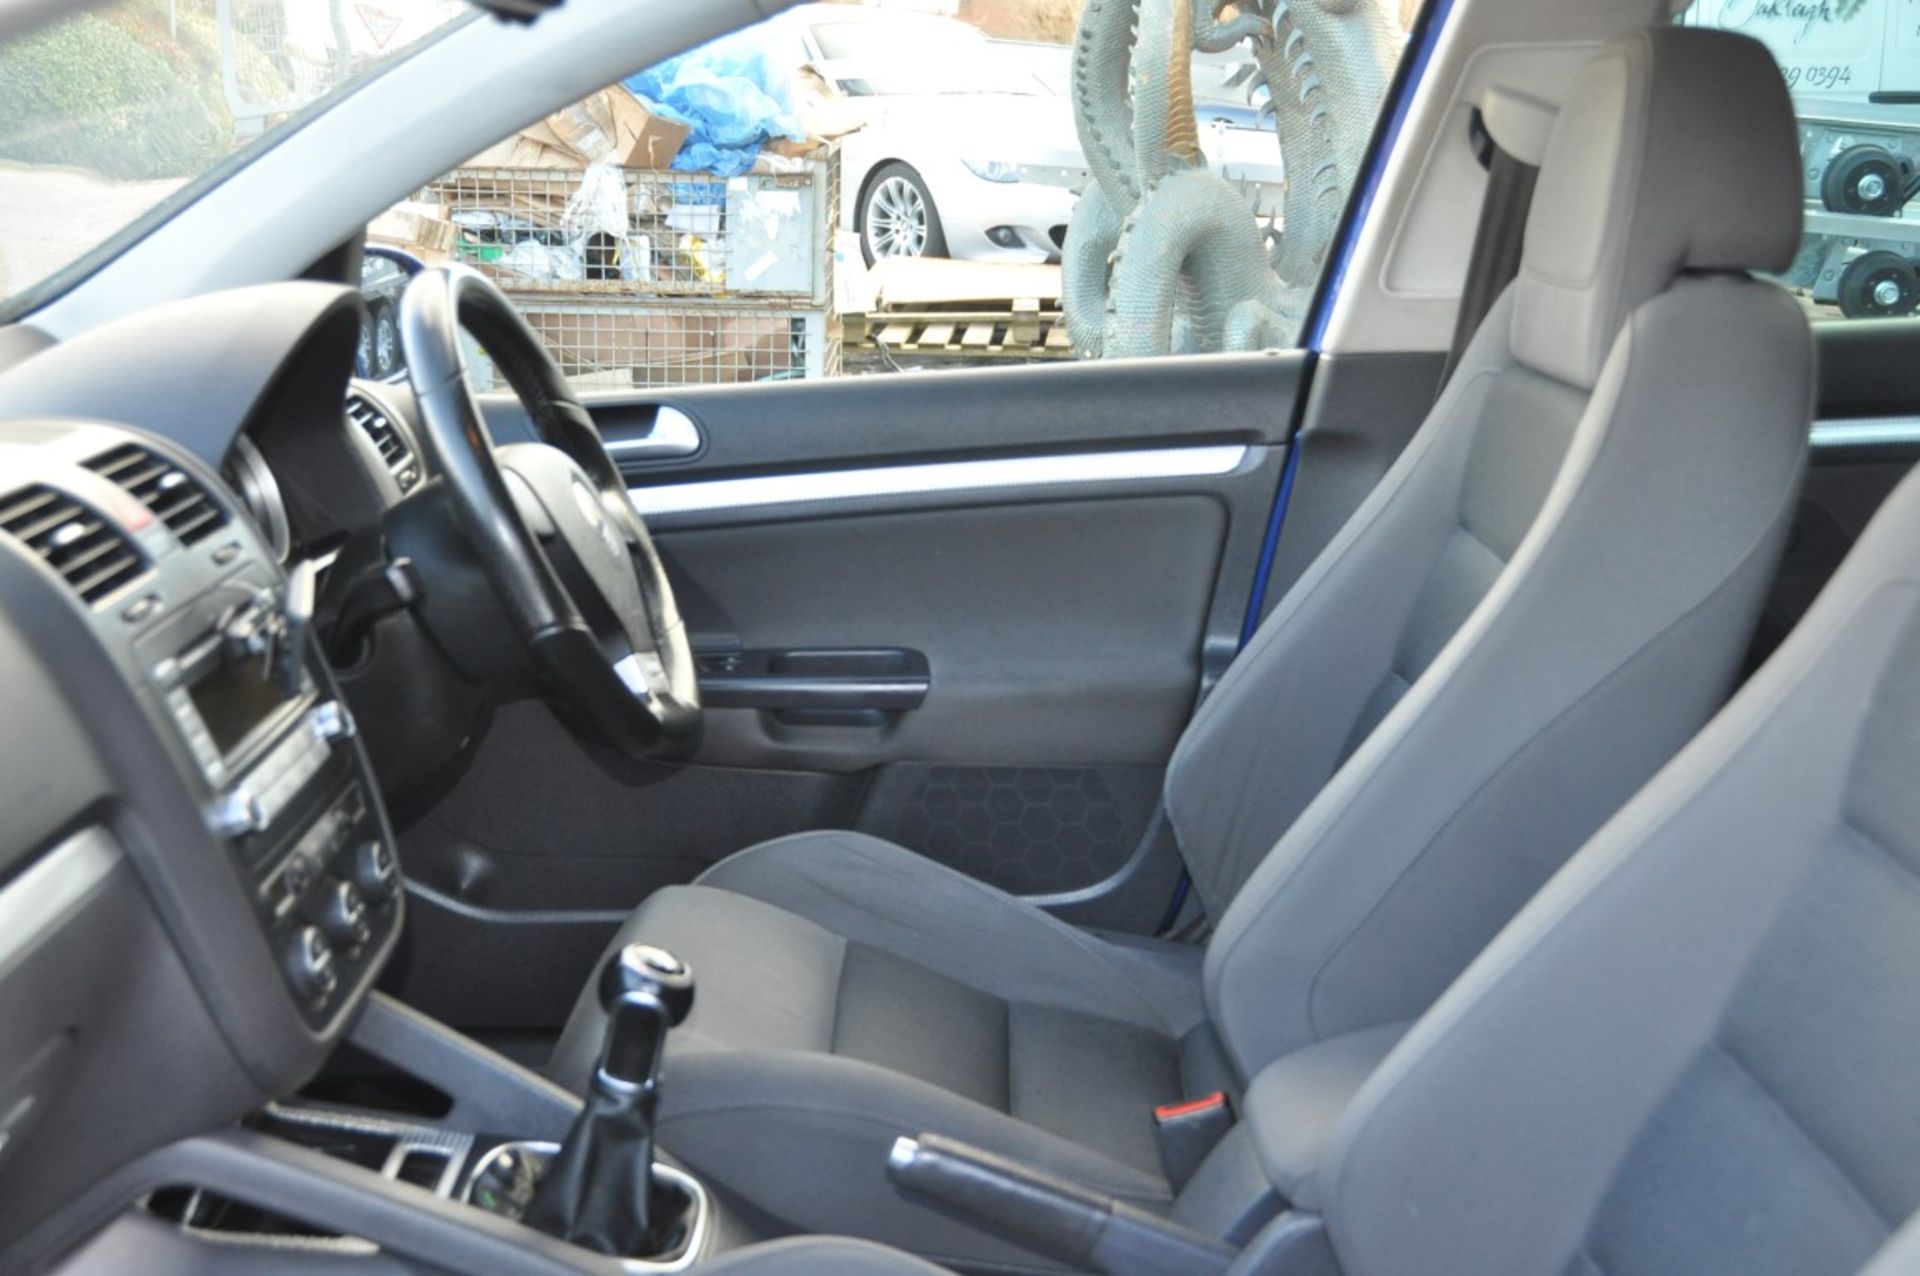 1 x Volkswagon Golf R32 V6 "5 Door" 2008, Blue - Heated Seats, 42,733 Miles - MOT Jan 2016 - Image 10 of 25